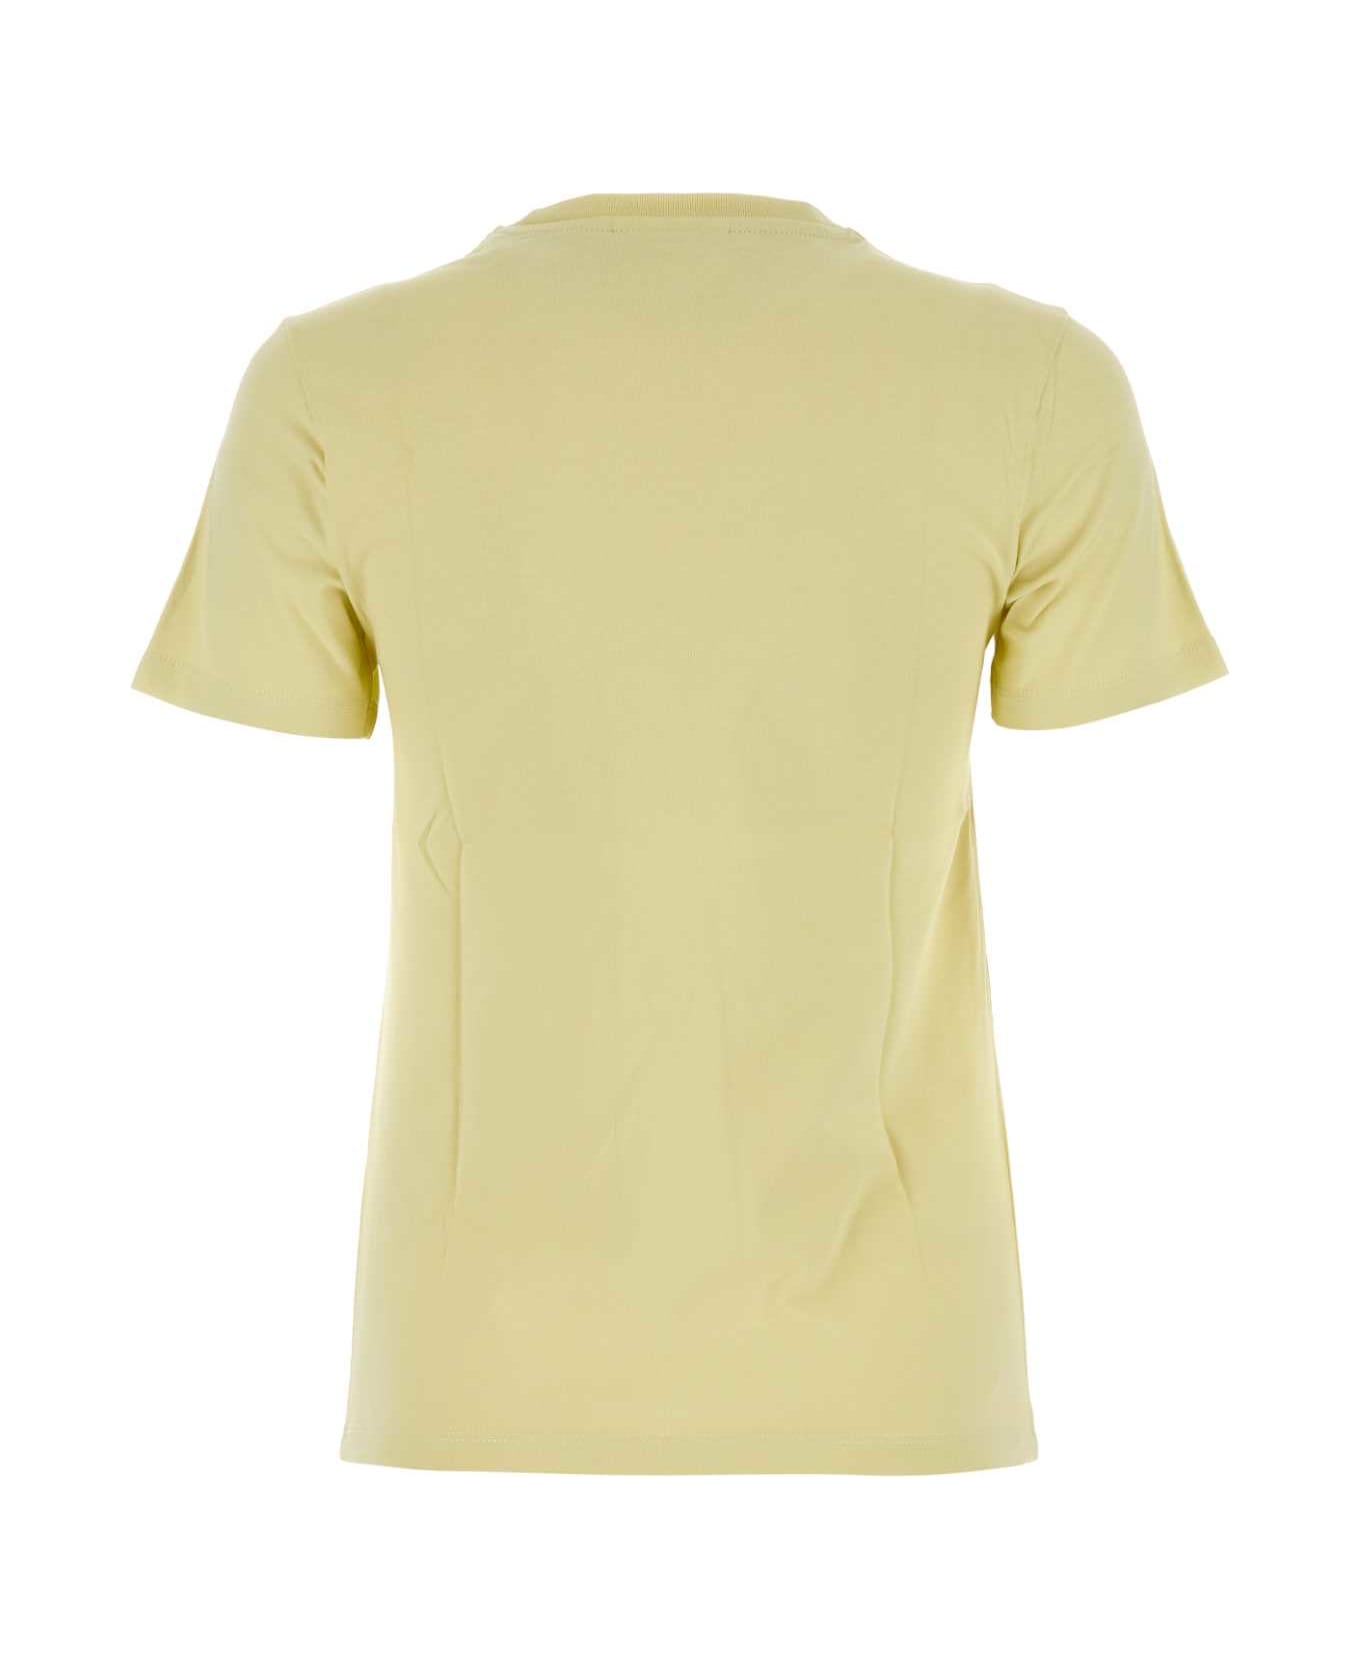 Maison Kitsuné Pastel Yellow Cotton T-shirt - CHALKYELLOW